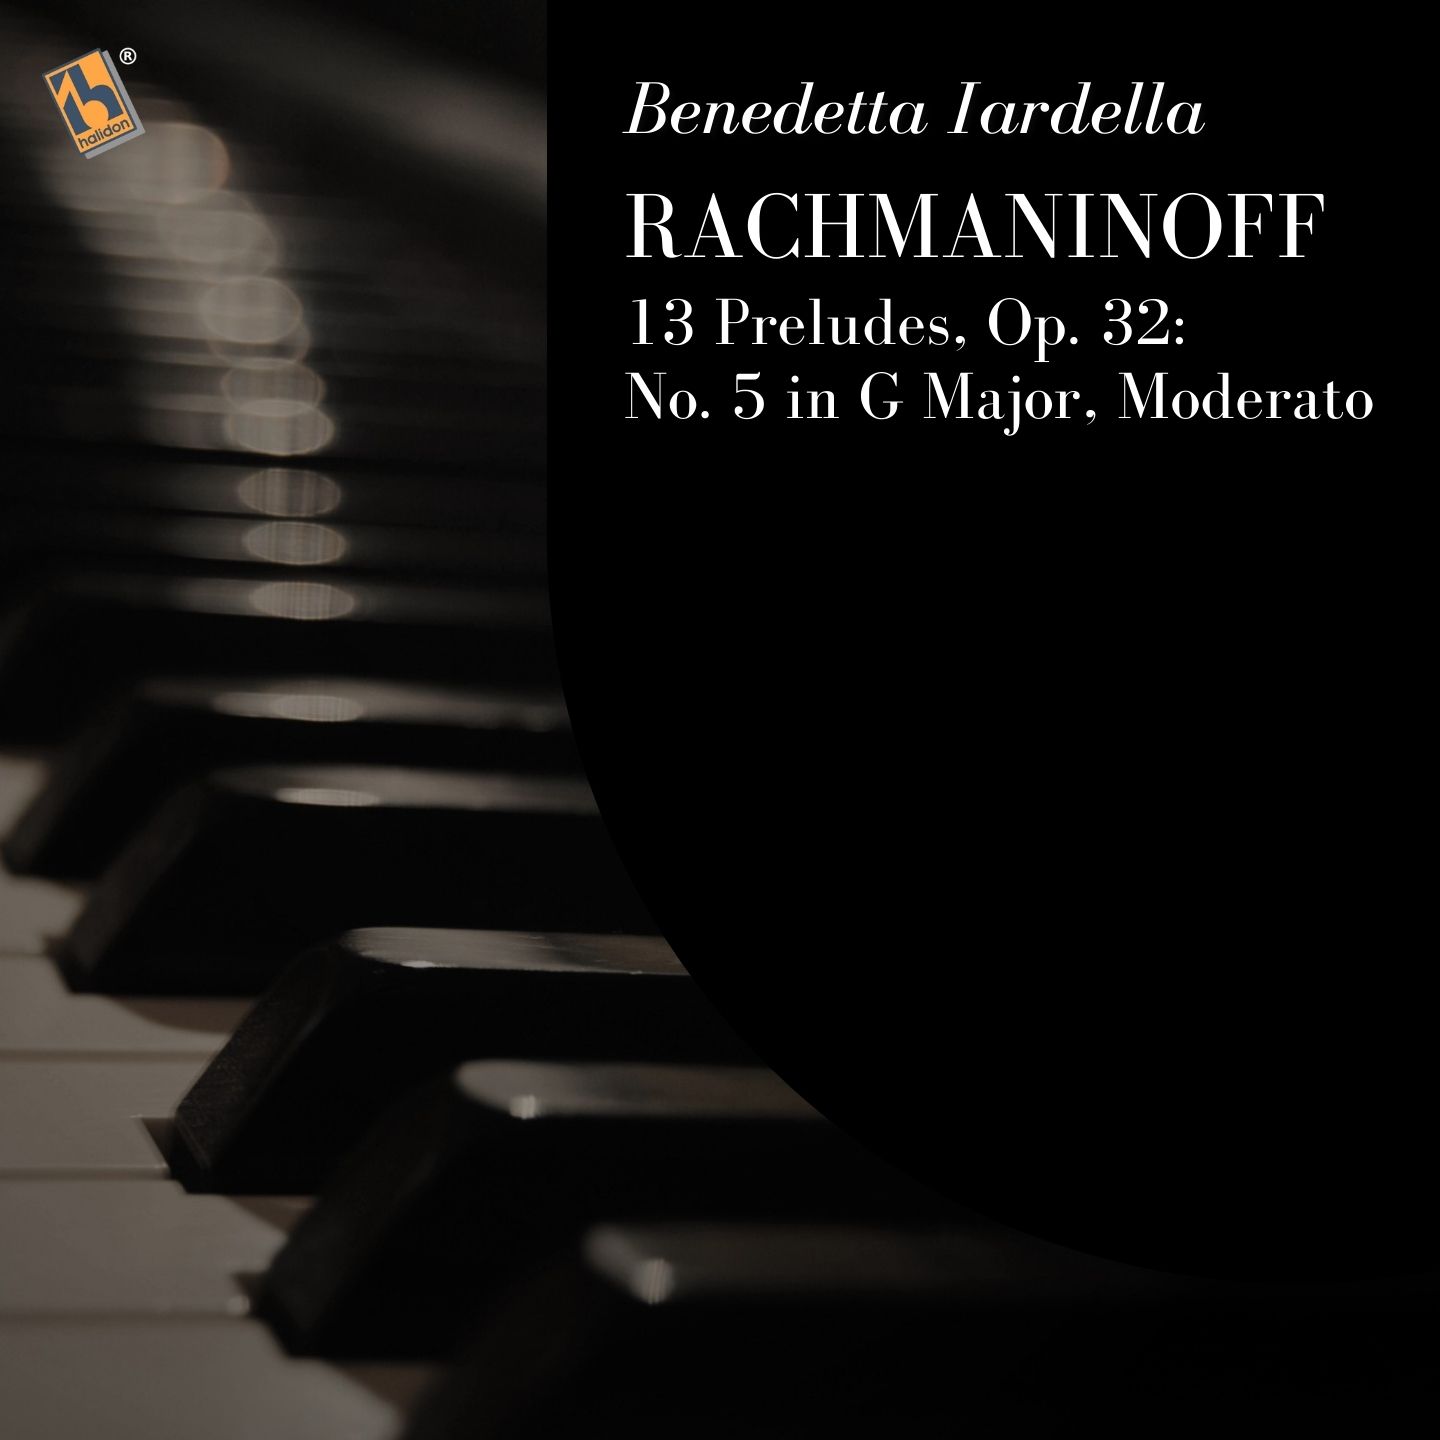 Rachmaninoff: 13 Preludes, Op. 32: No. 5 in G Major, Moderato